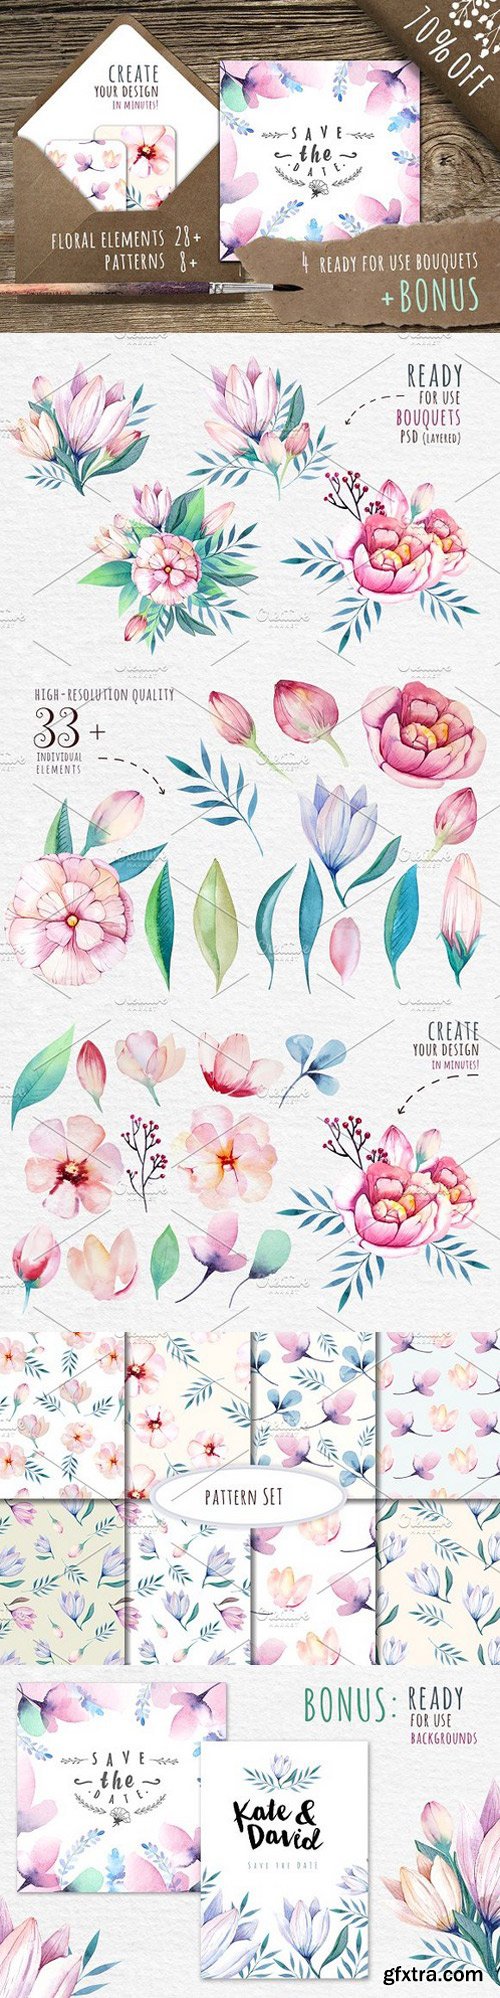 CM - Watercolour floral DIY+Bonus 343520